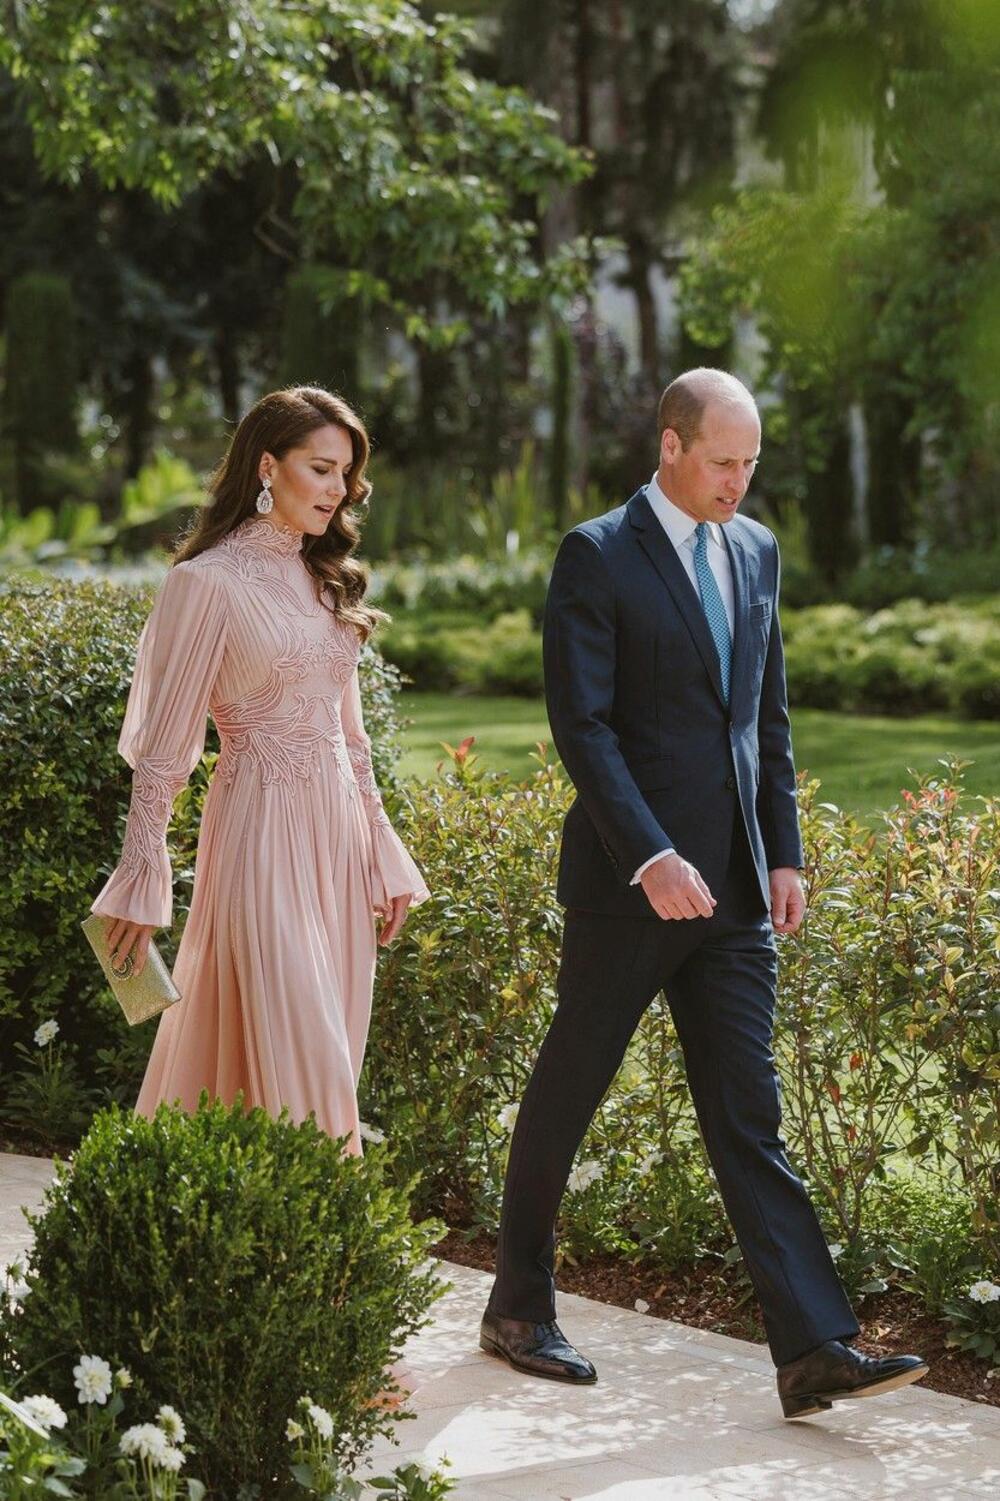 <p>Princeza od Velsa je bila jedna od najzapaženijih na venčanju jordanskog princa Huseina i Radžve Kaled Seif.</p>